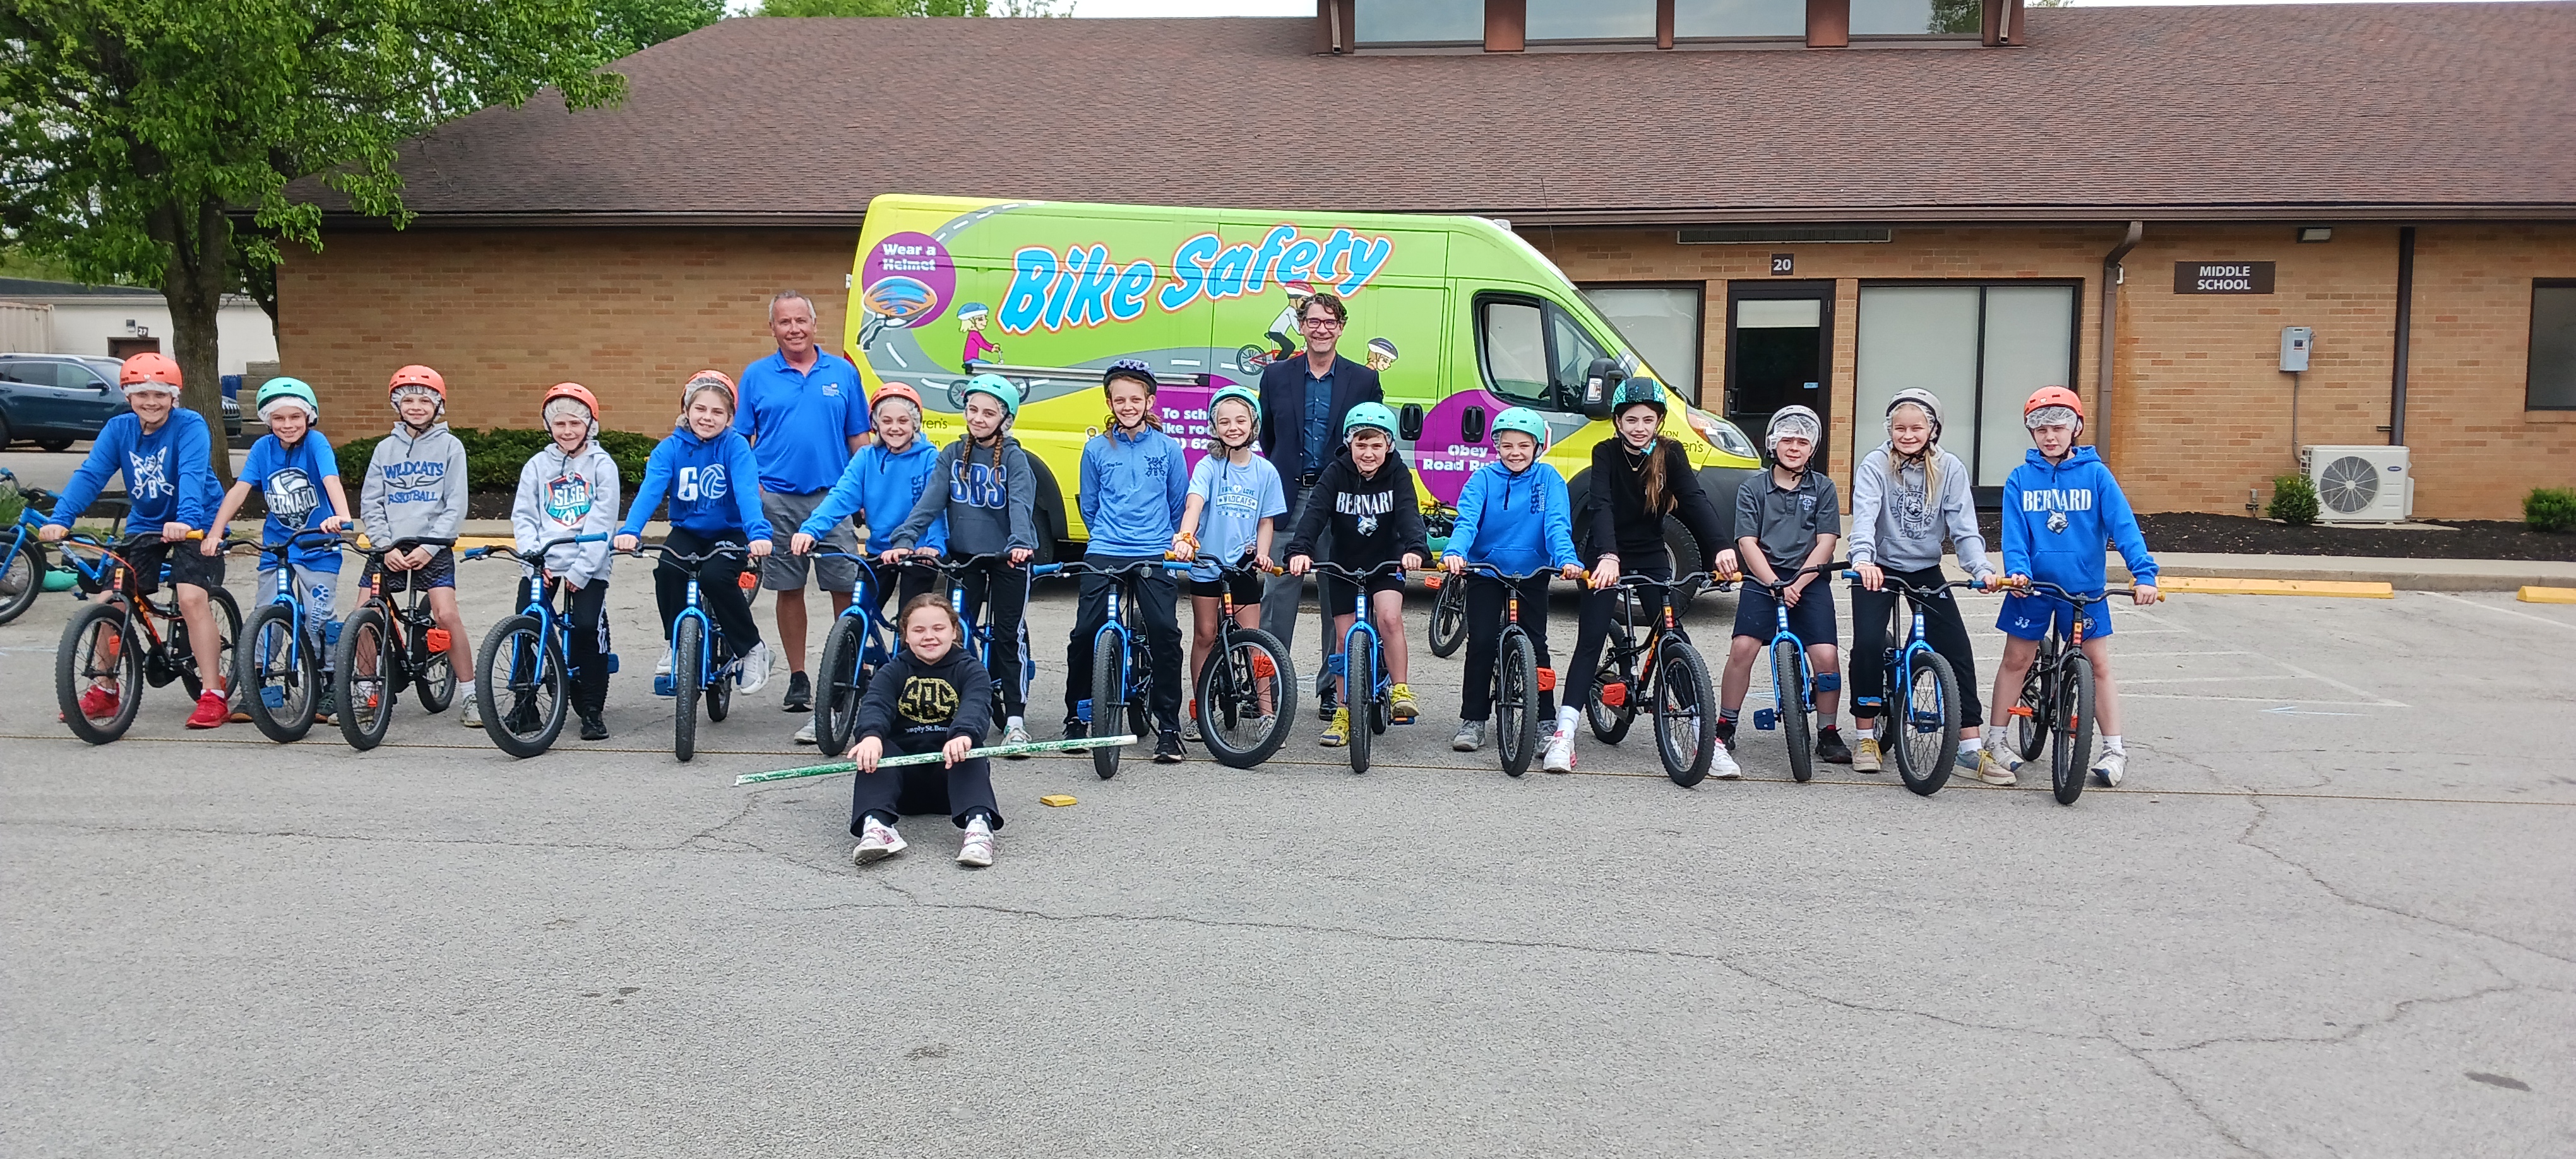 Norton Children's Hospital Bike Safety Rodeo Program participants